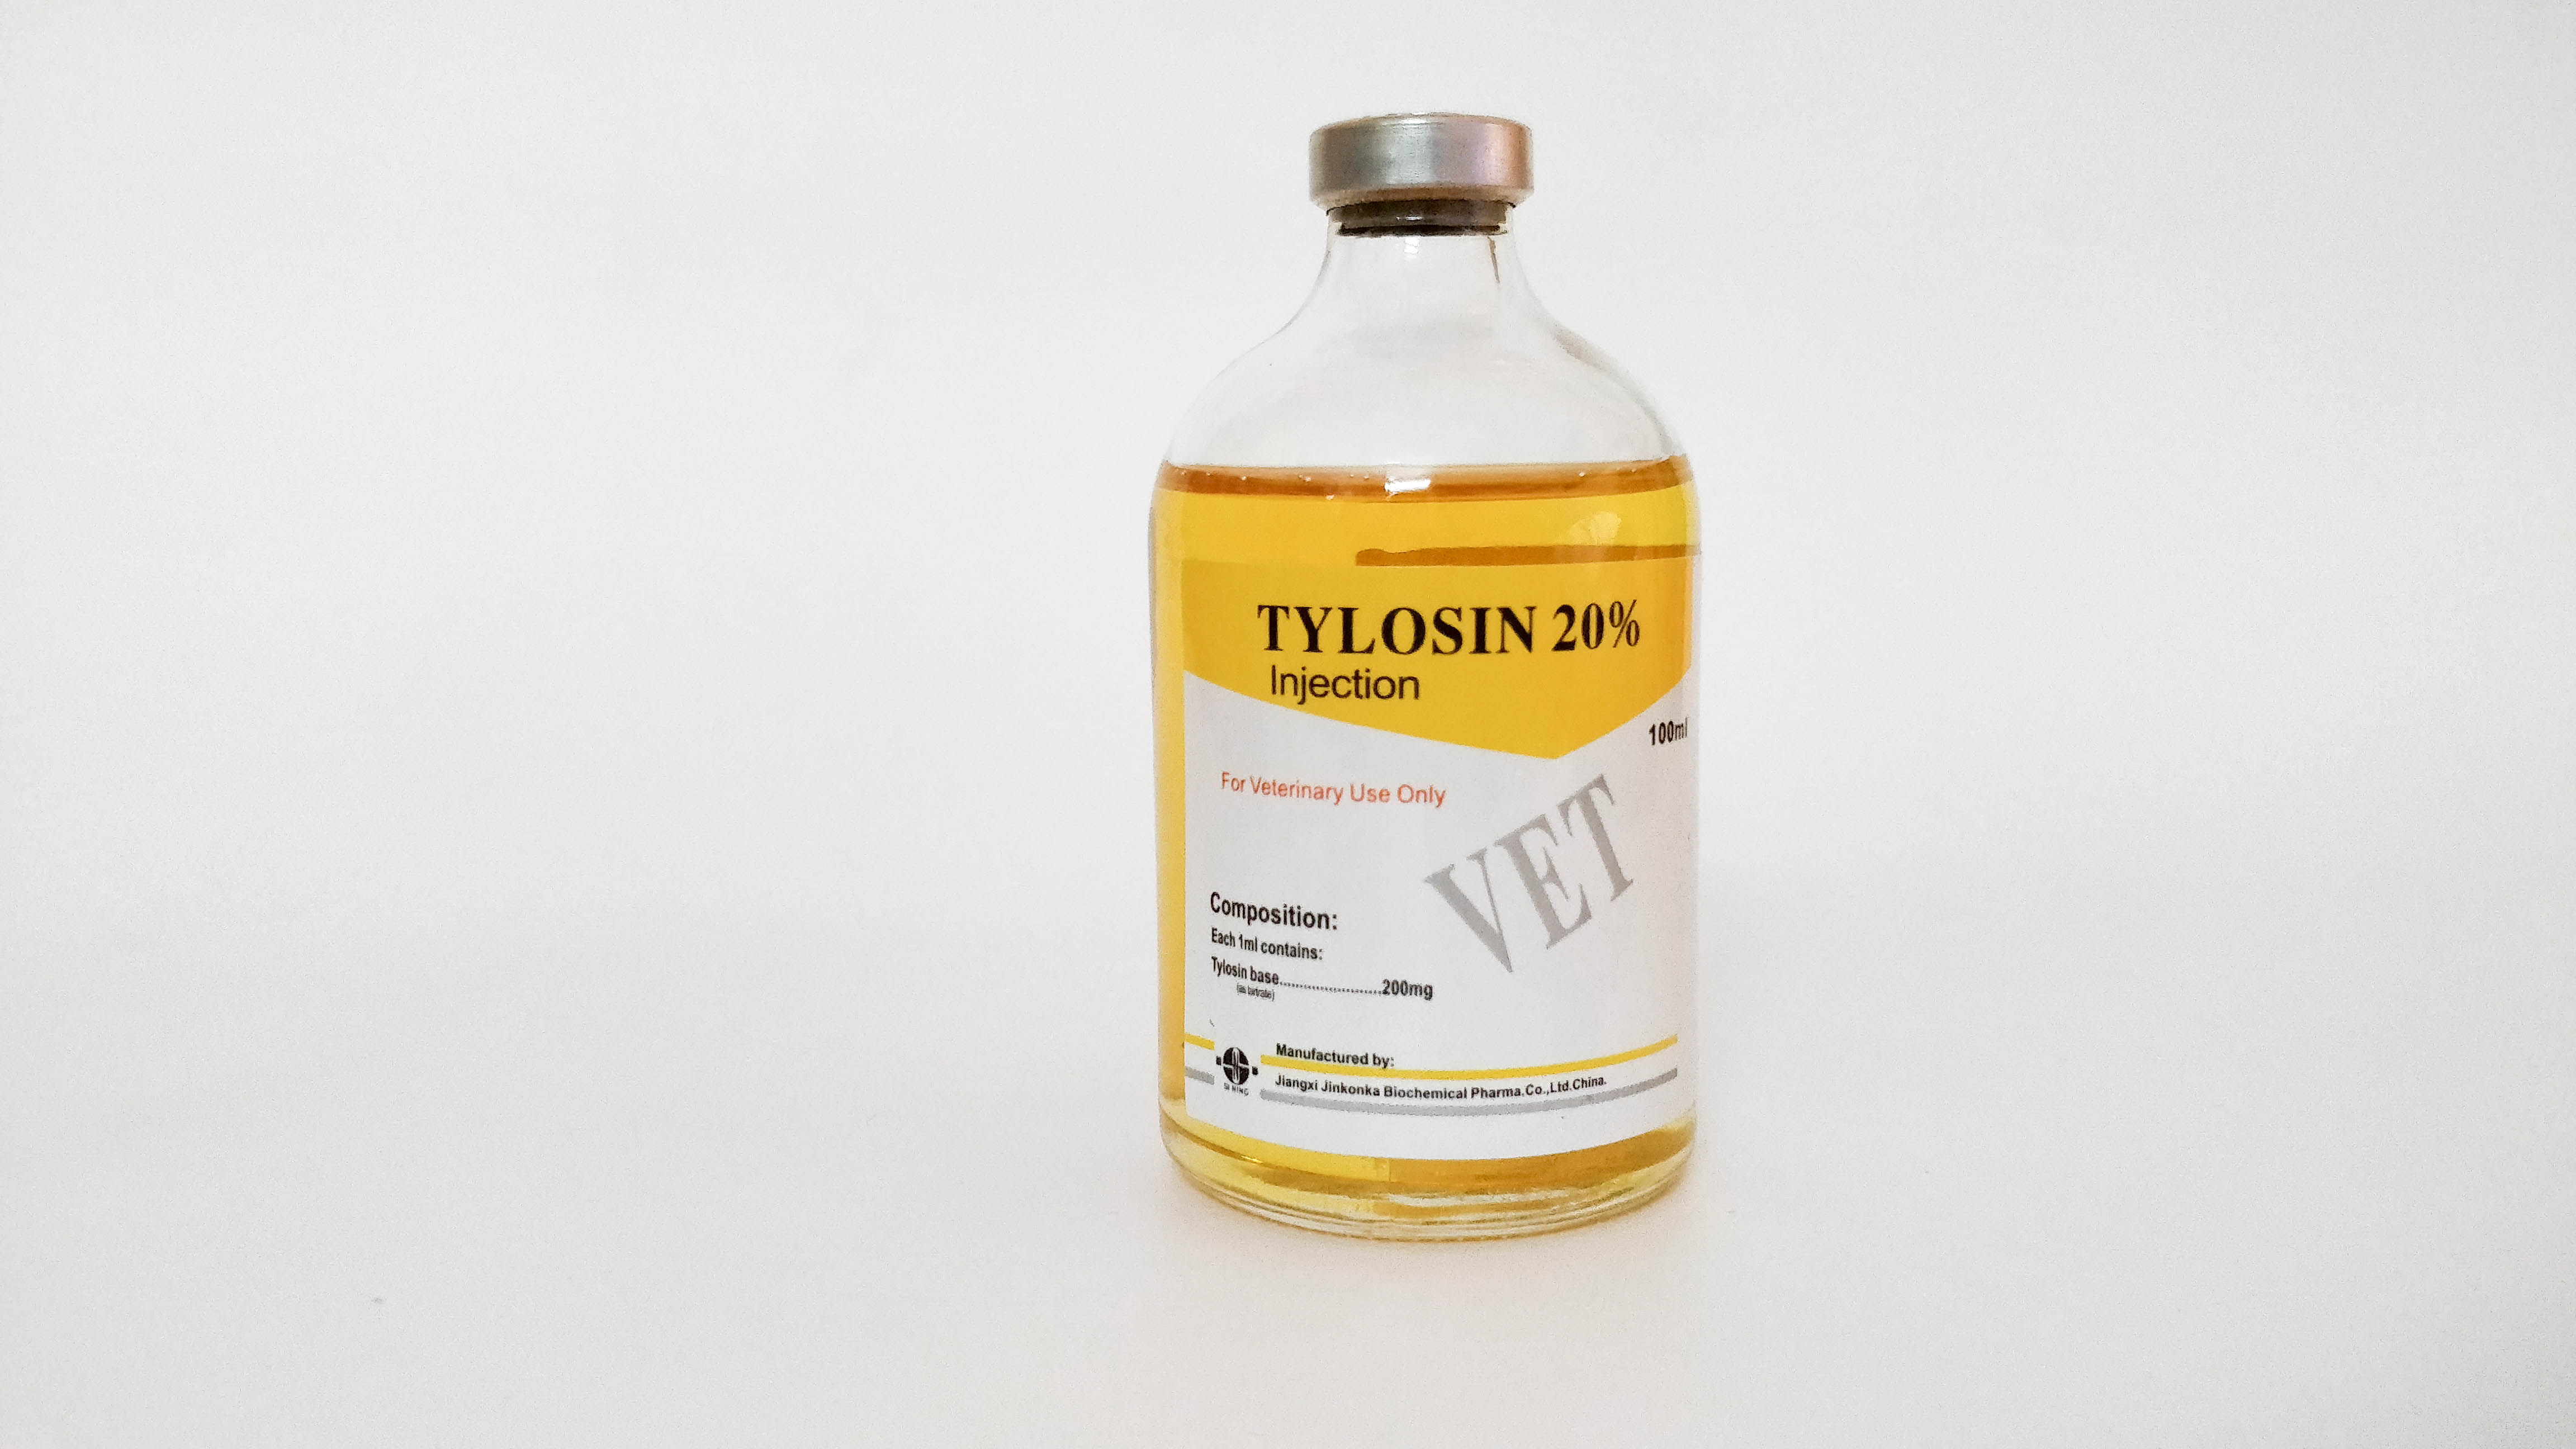 Tylosin 20% injection